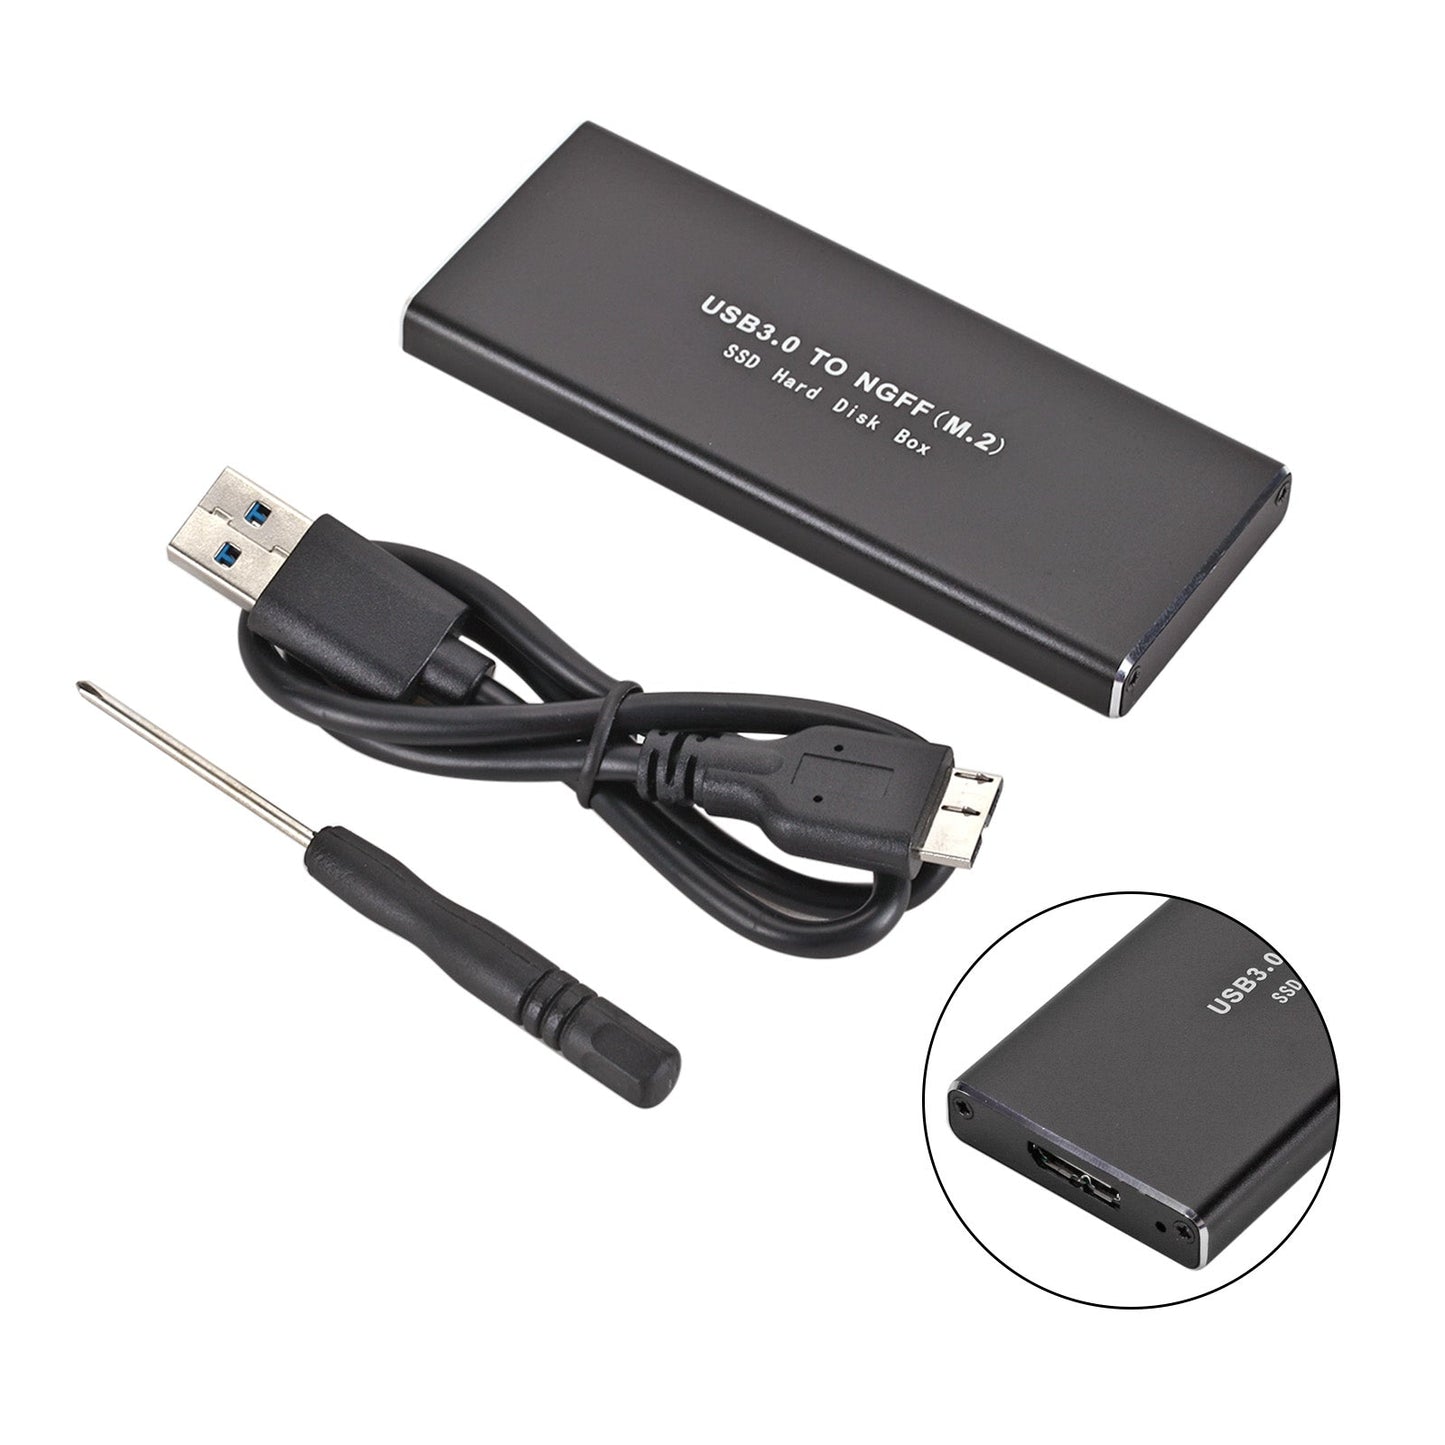 M.2 NGFF SATA SSD to USB3.0 External SSD Reader Converter Adapter hard drive box